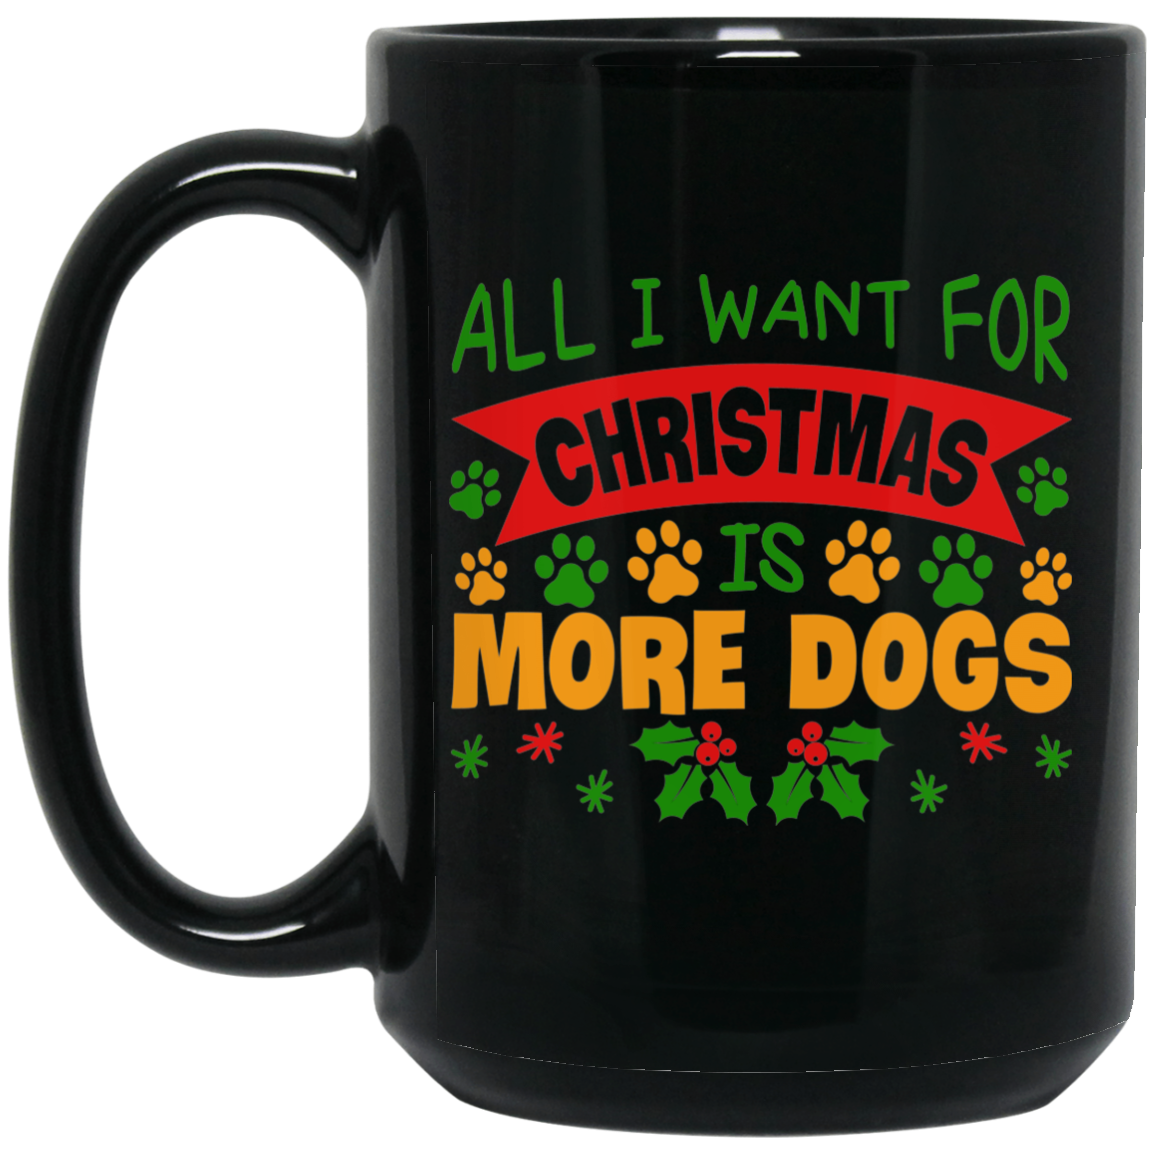 All I Want for Christmas is More Dogs 15 oz. Black Mug